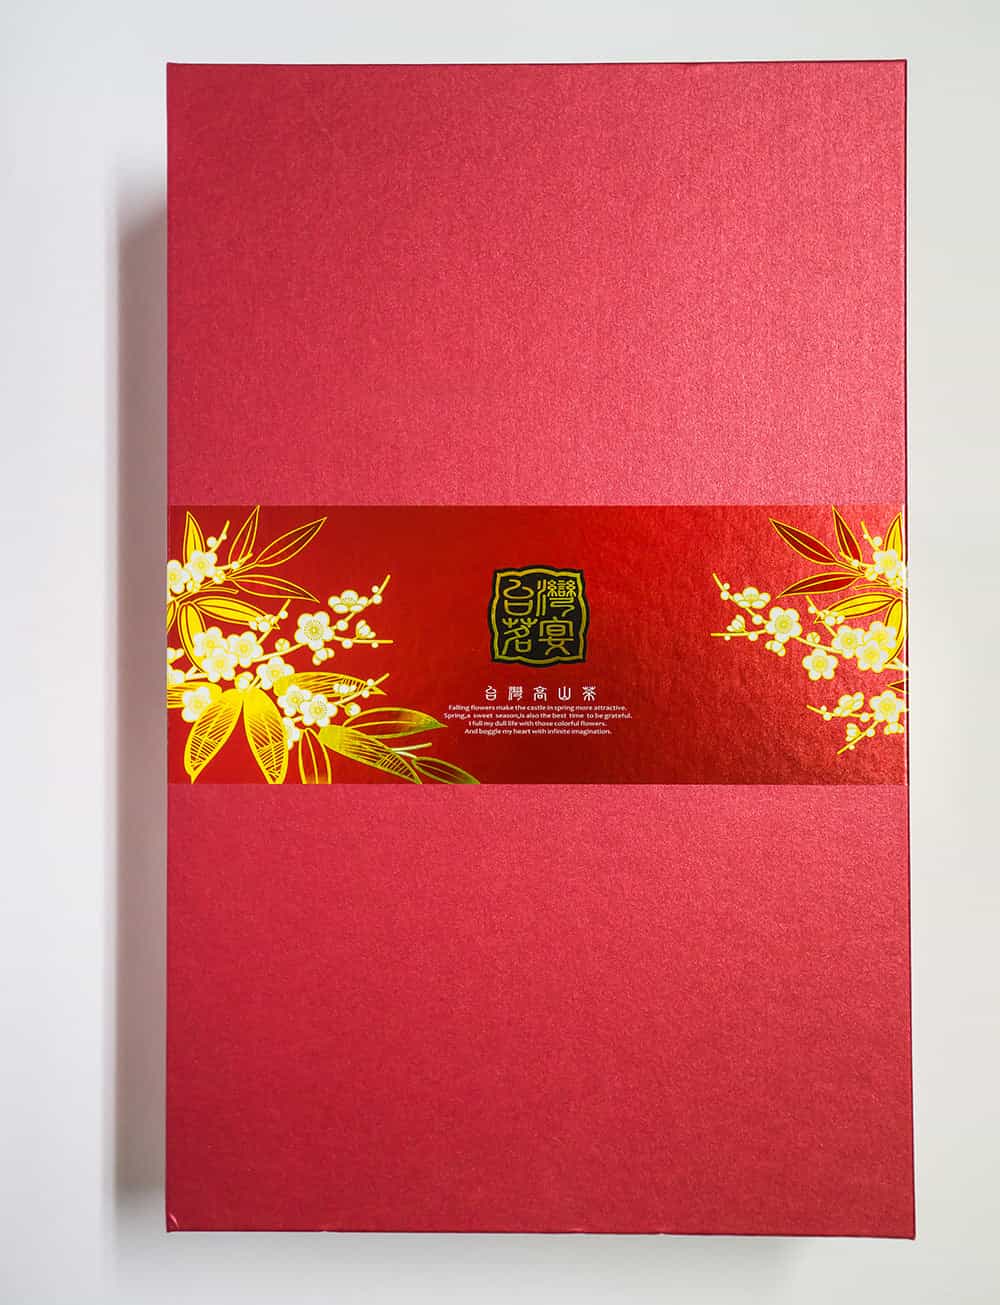 MingYan Oolong Tea Gift Set - Type 3 Herbprime